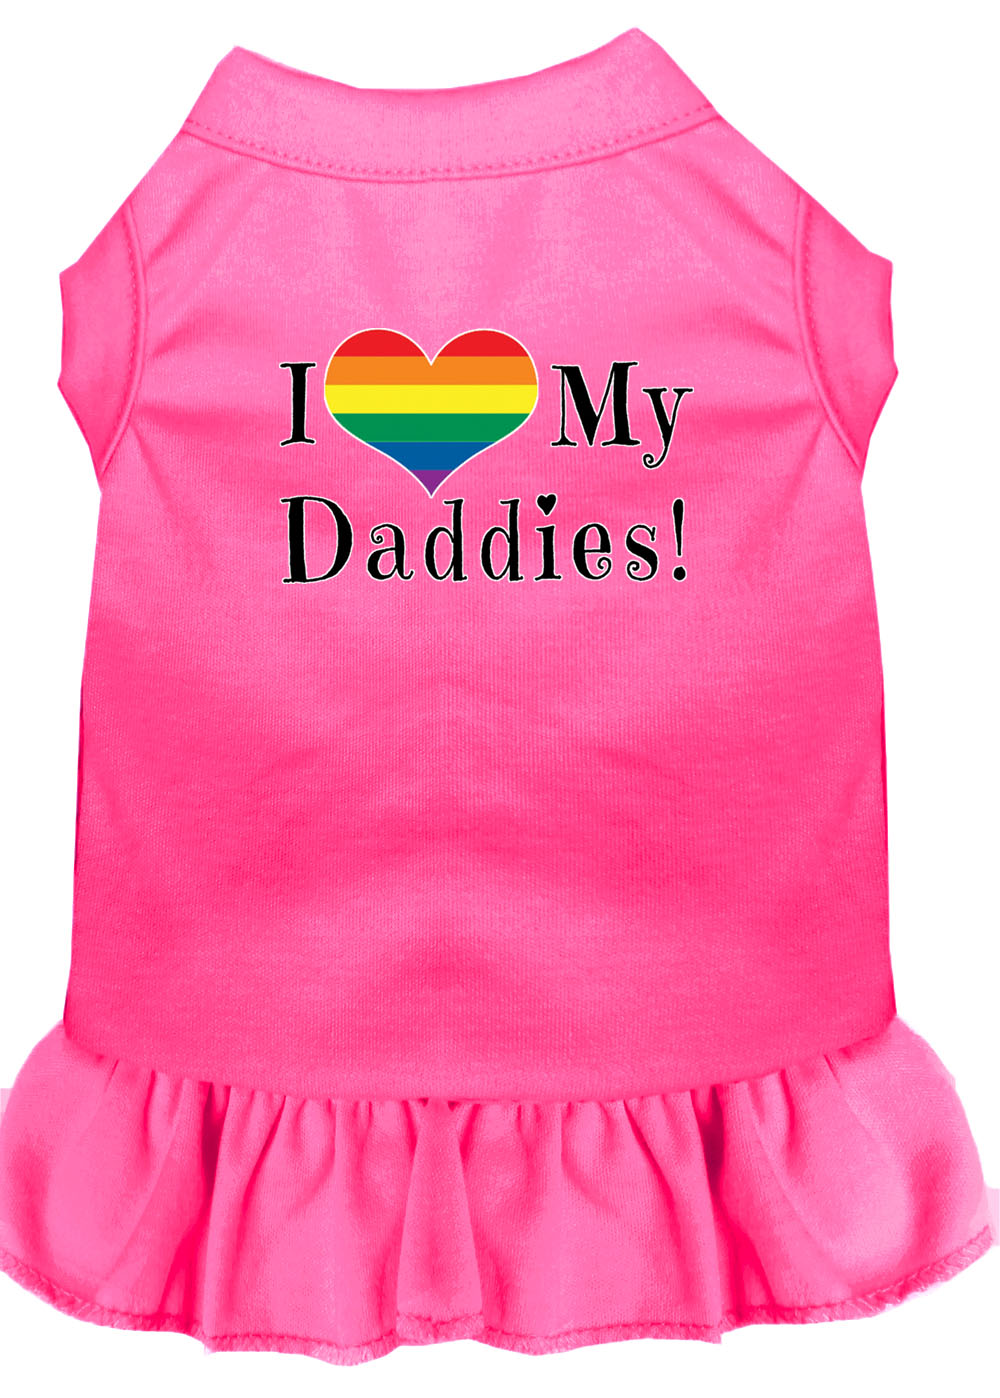 I Heart my Daddies Screen Print Dog Dress Bright Pink XL